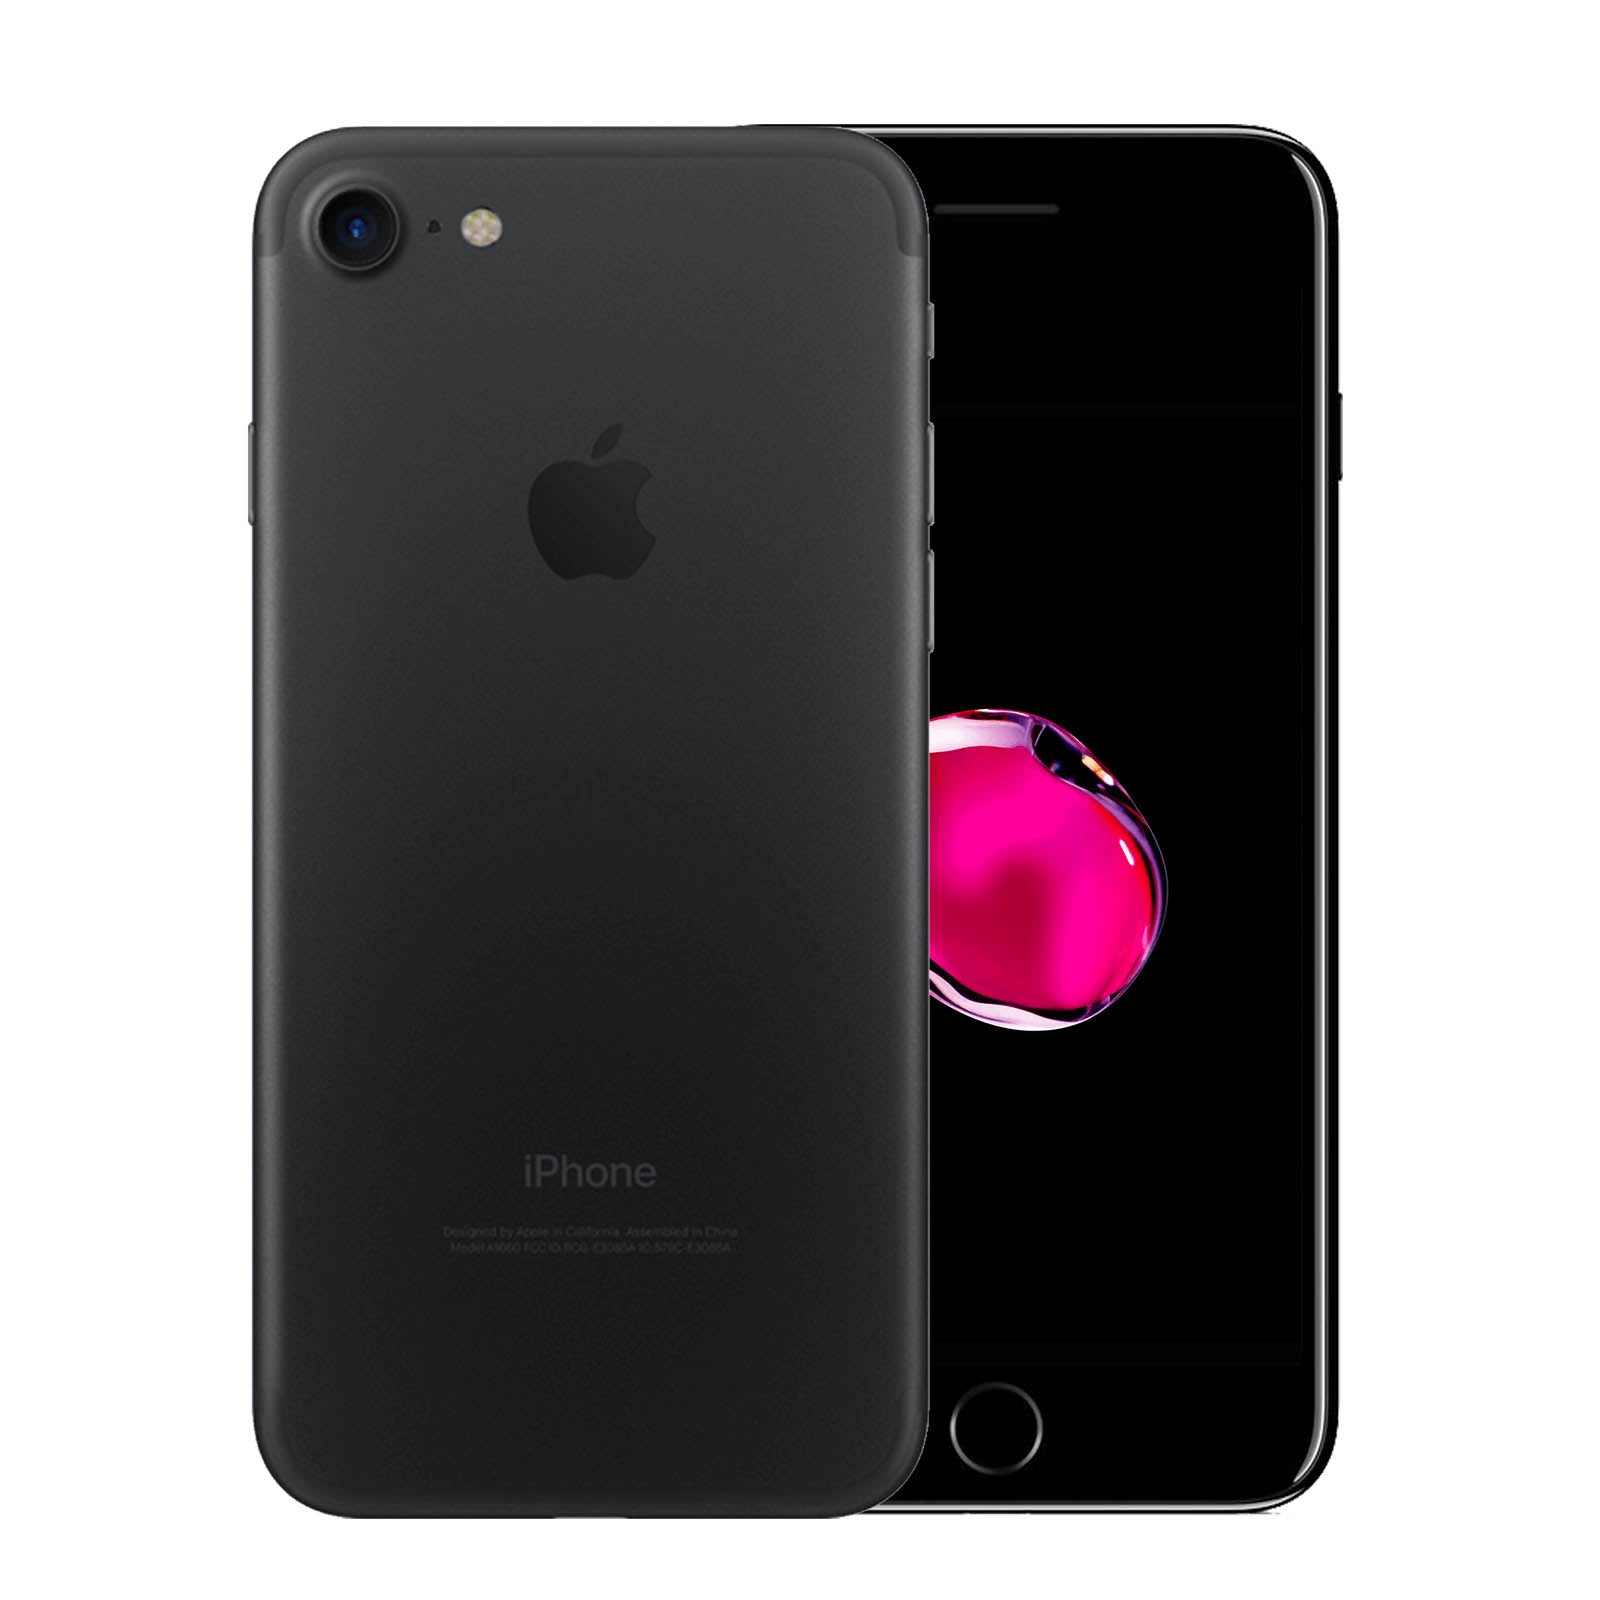 Apple iPhone 7 32GB Black Very Good- Unlocked